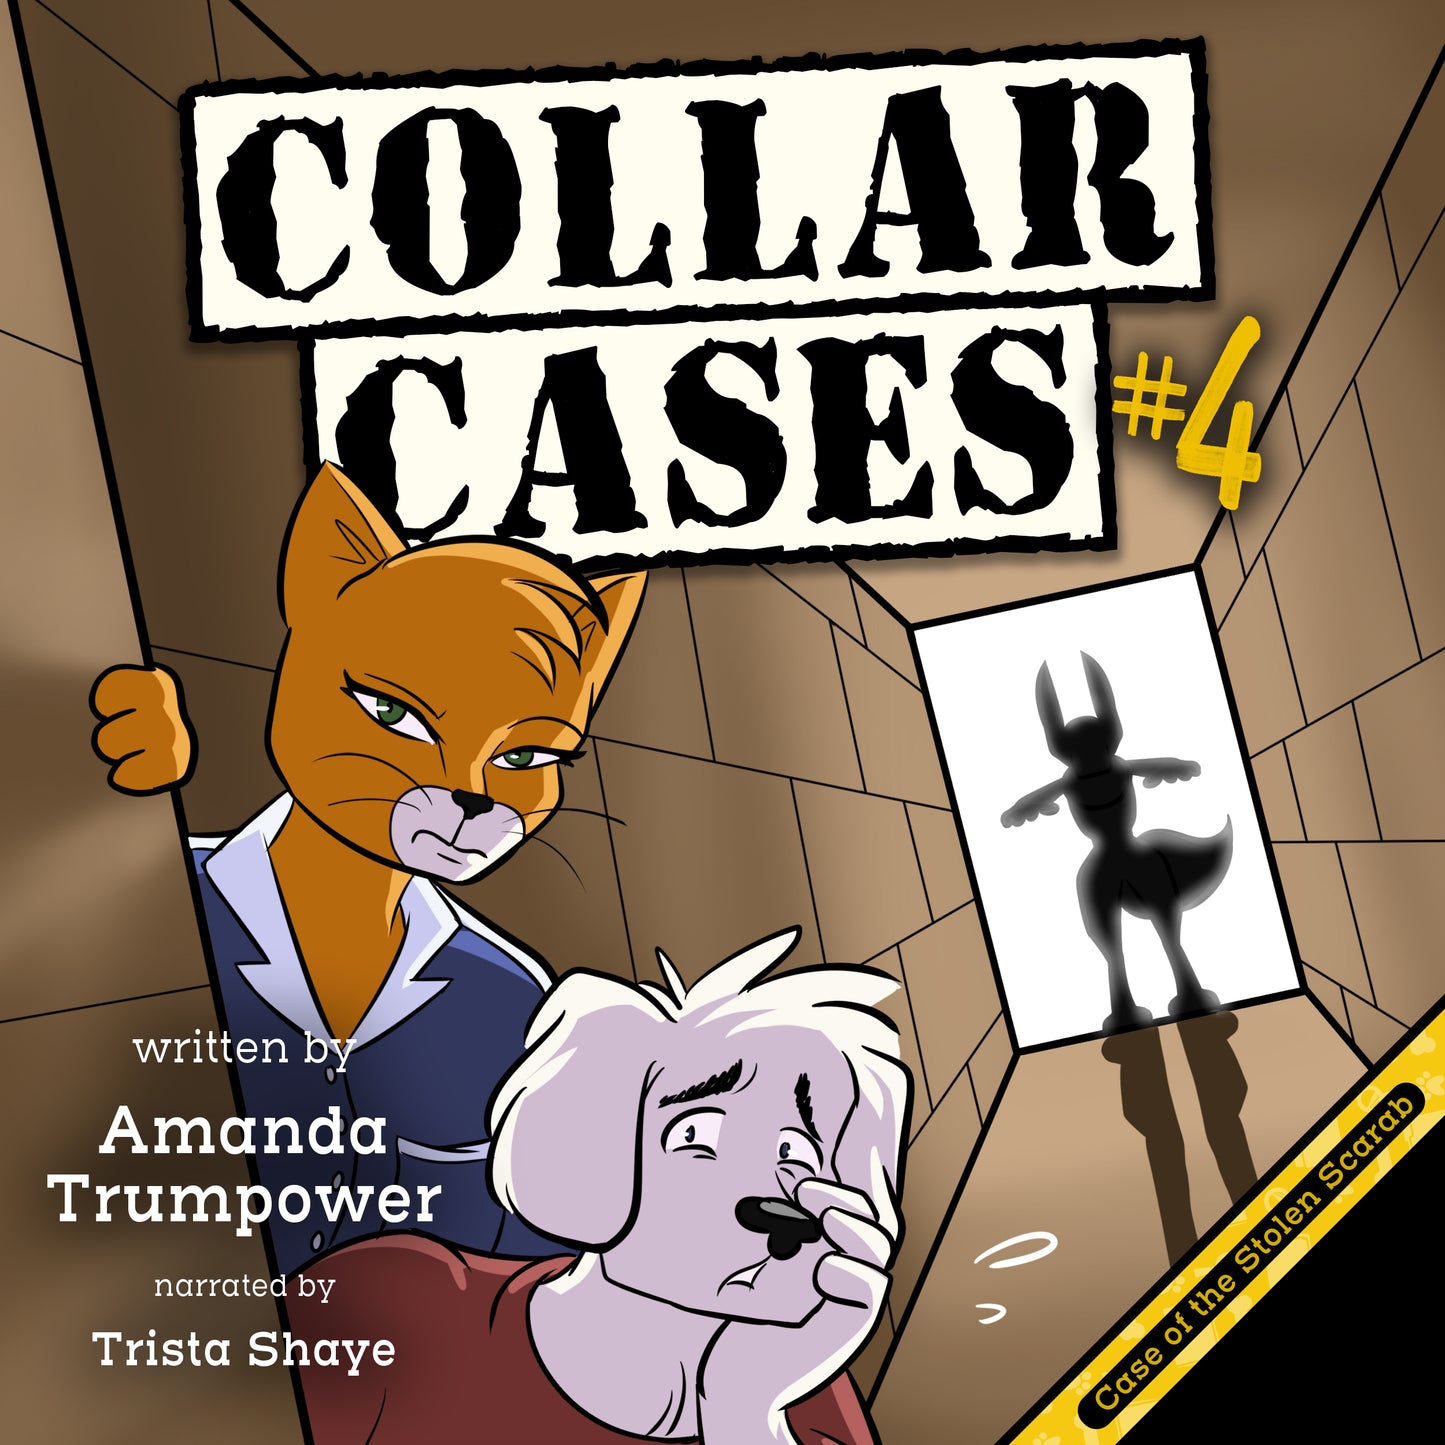 Collar Cases #4: Case of the Stolen Scarab